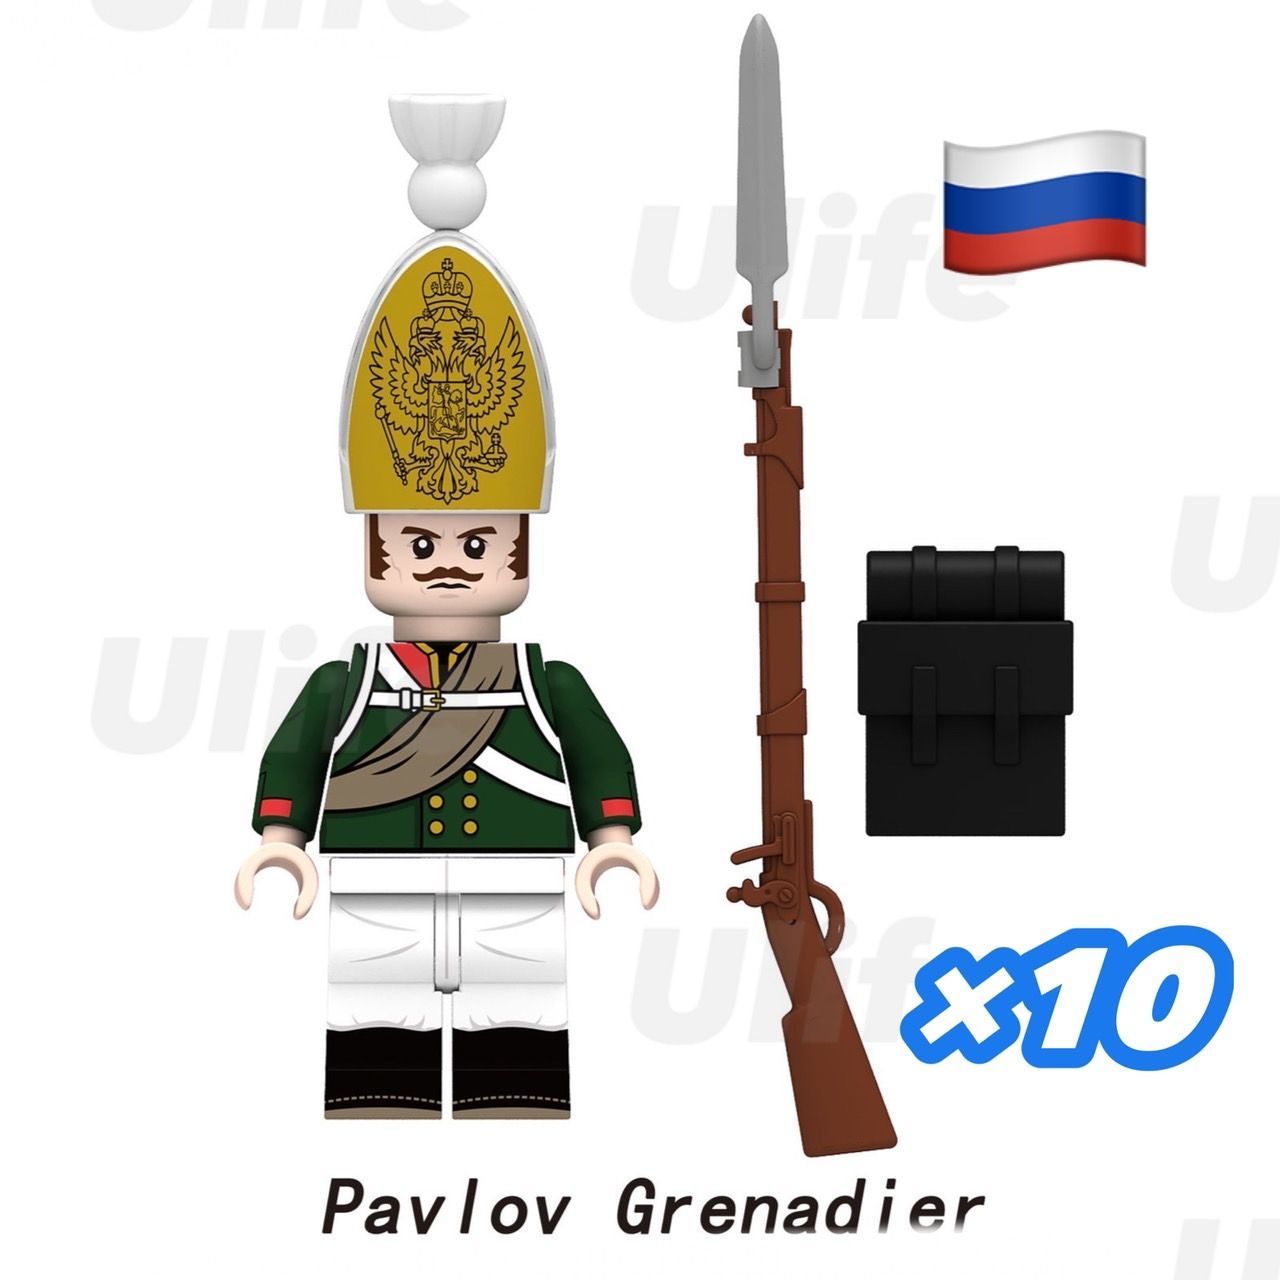 LEGOレゴ互換 10体セットＱ　ロシア ナポレオン戦争 ミニフィグ フィギュア